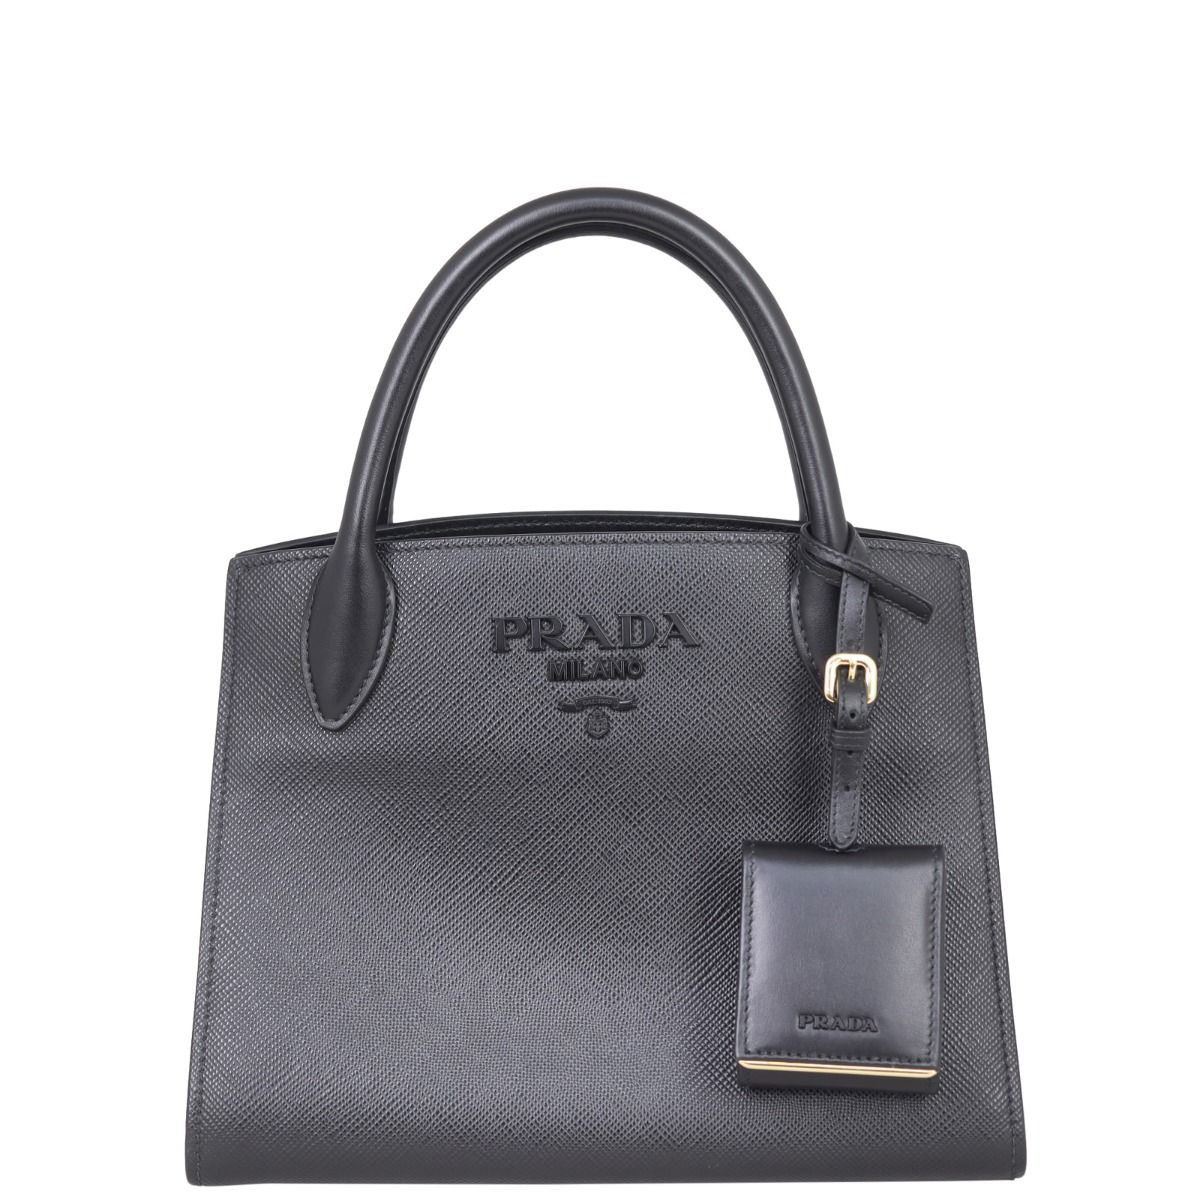 Prada Monochrome Handbags | Paul Smith